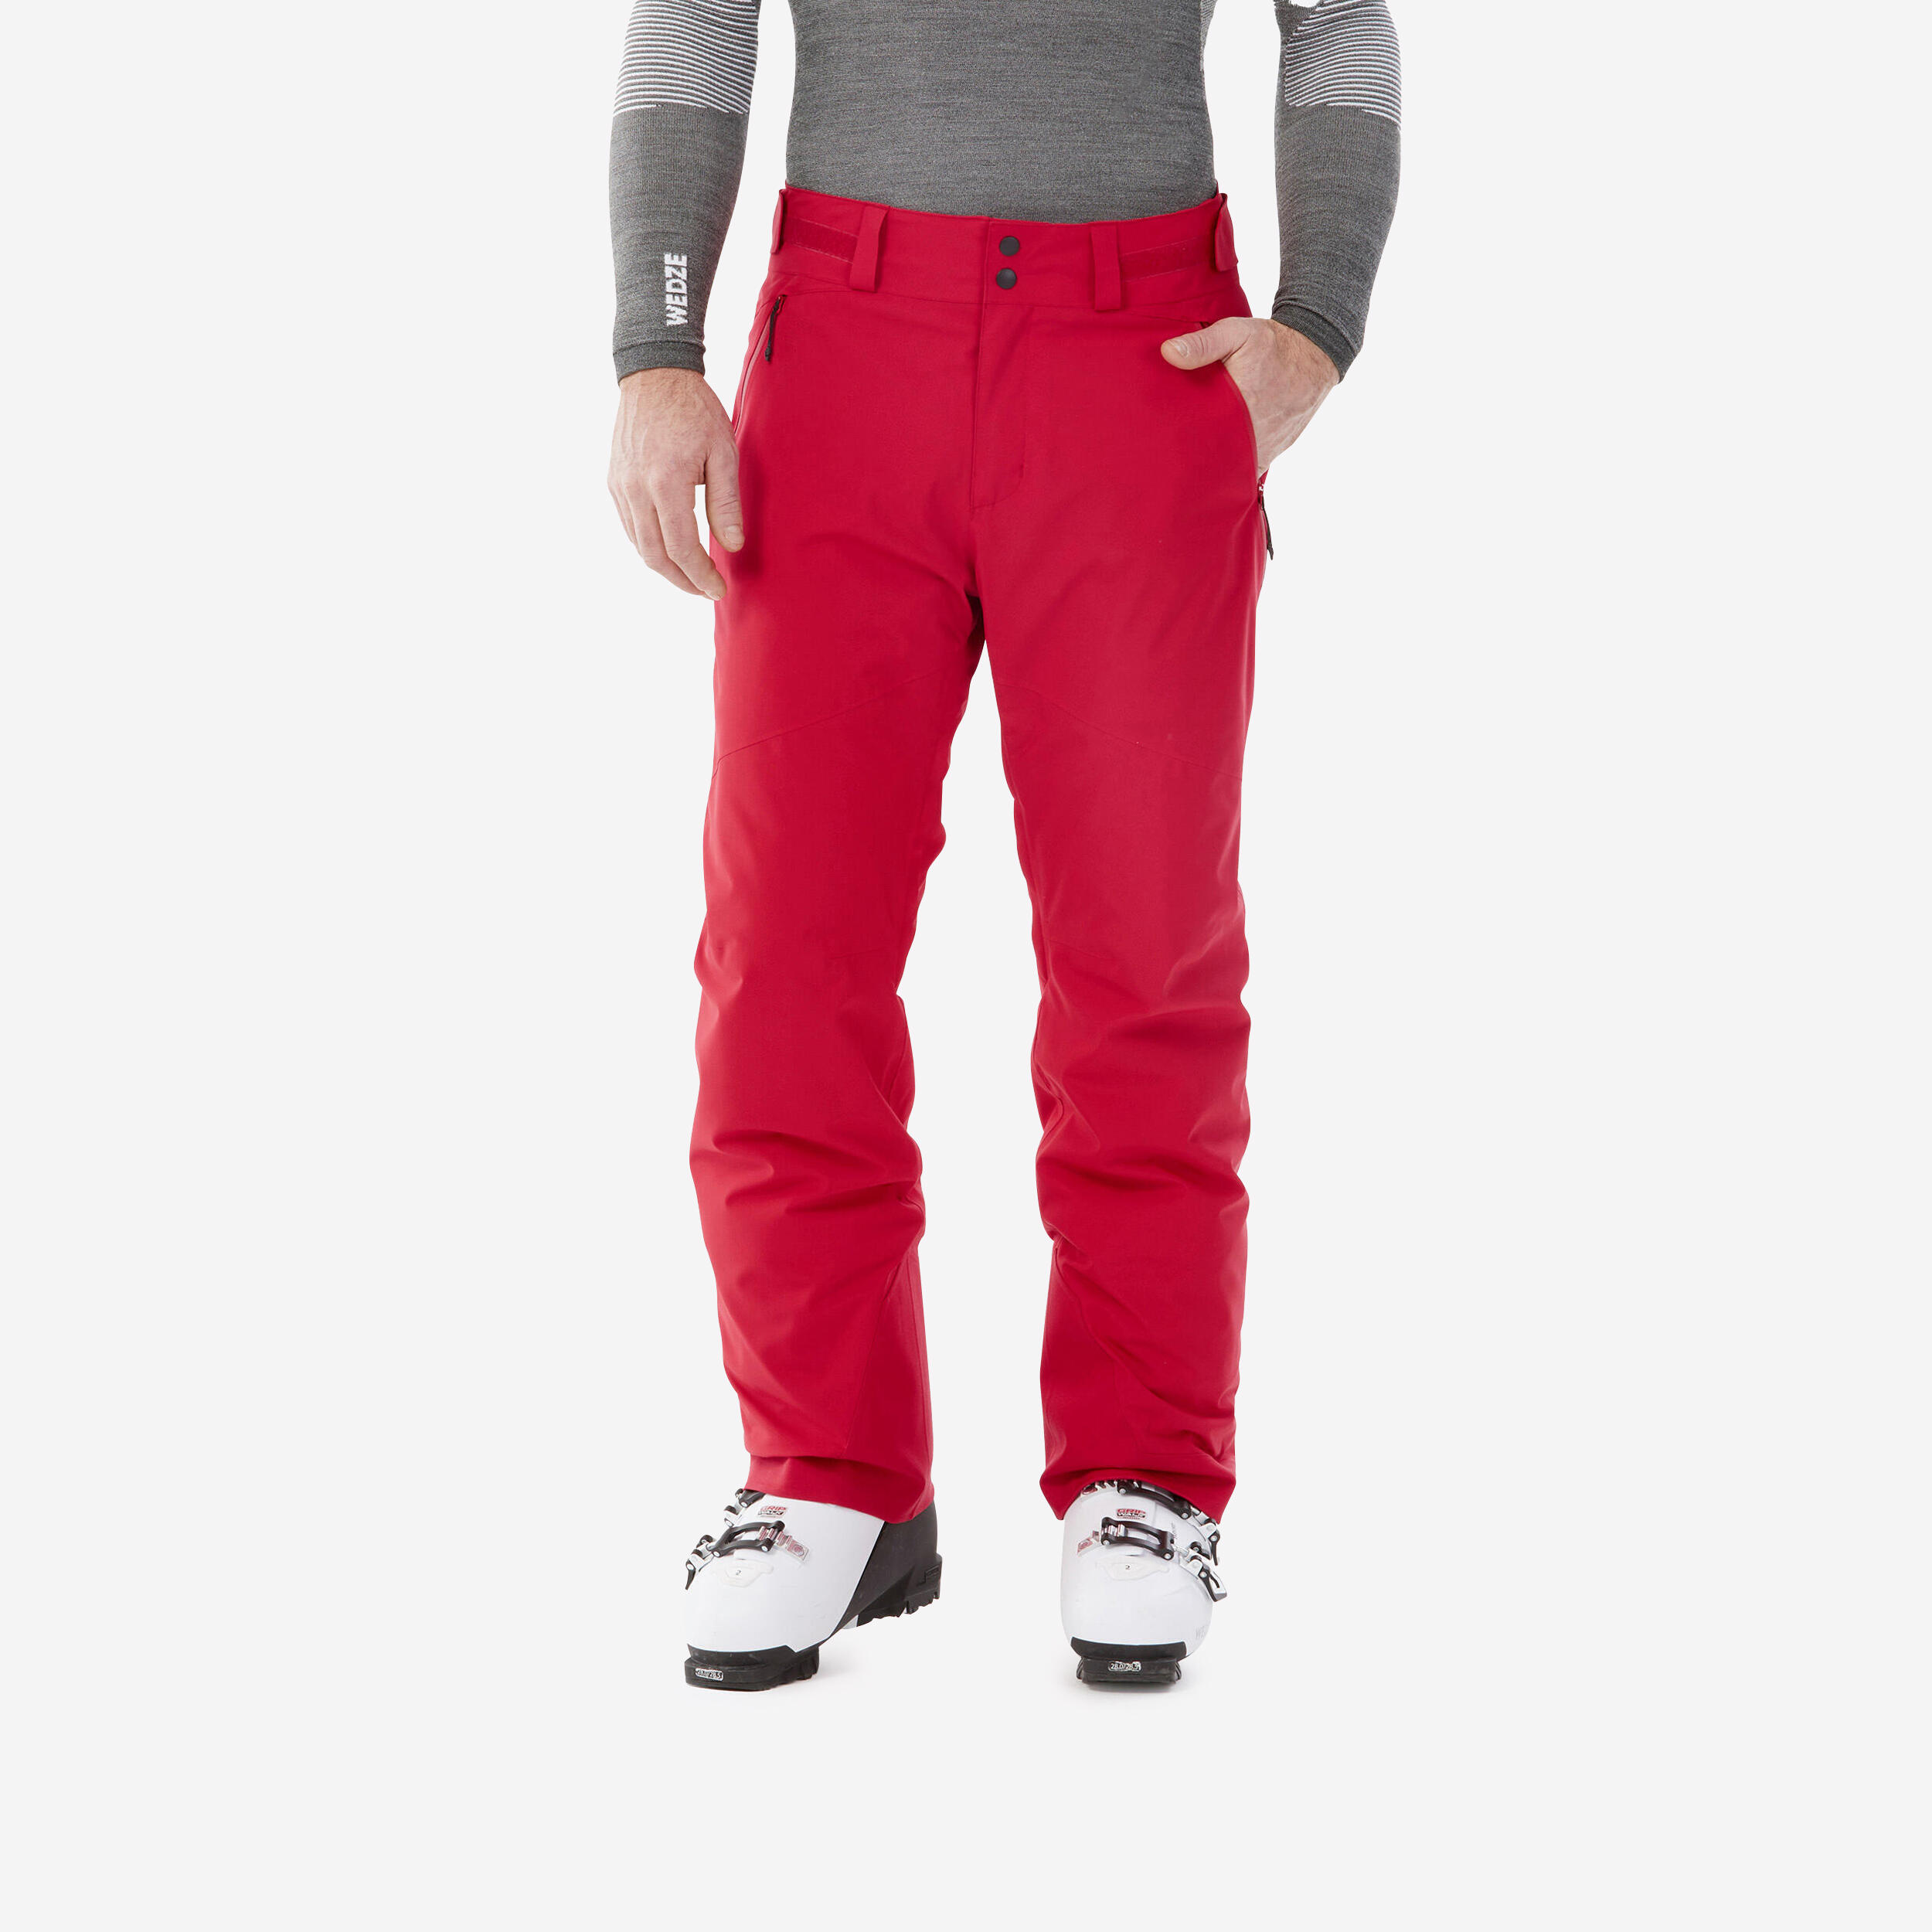 pantalon de ski chaud regular homme 500 - rouge - wedze